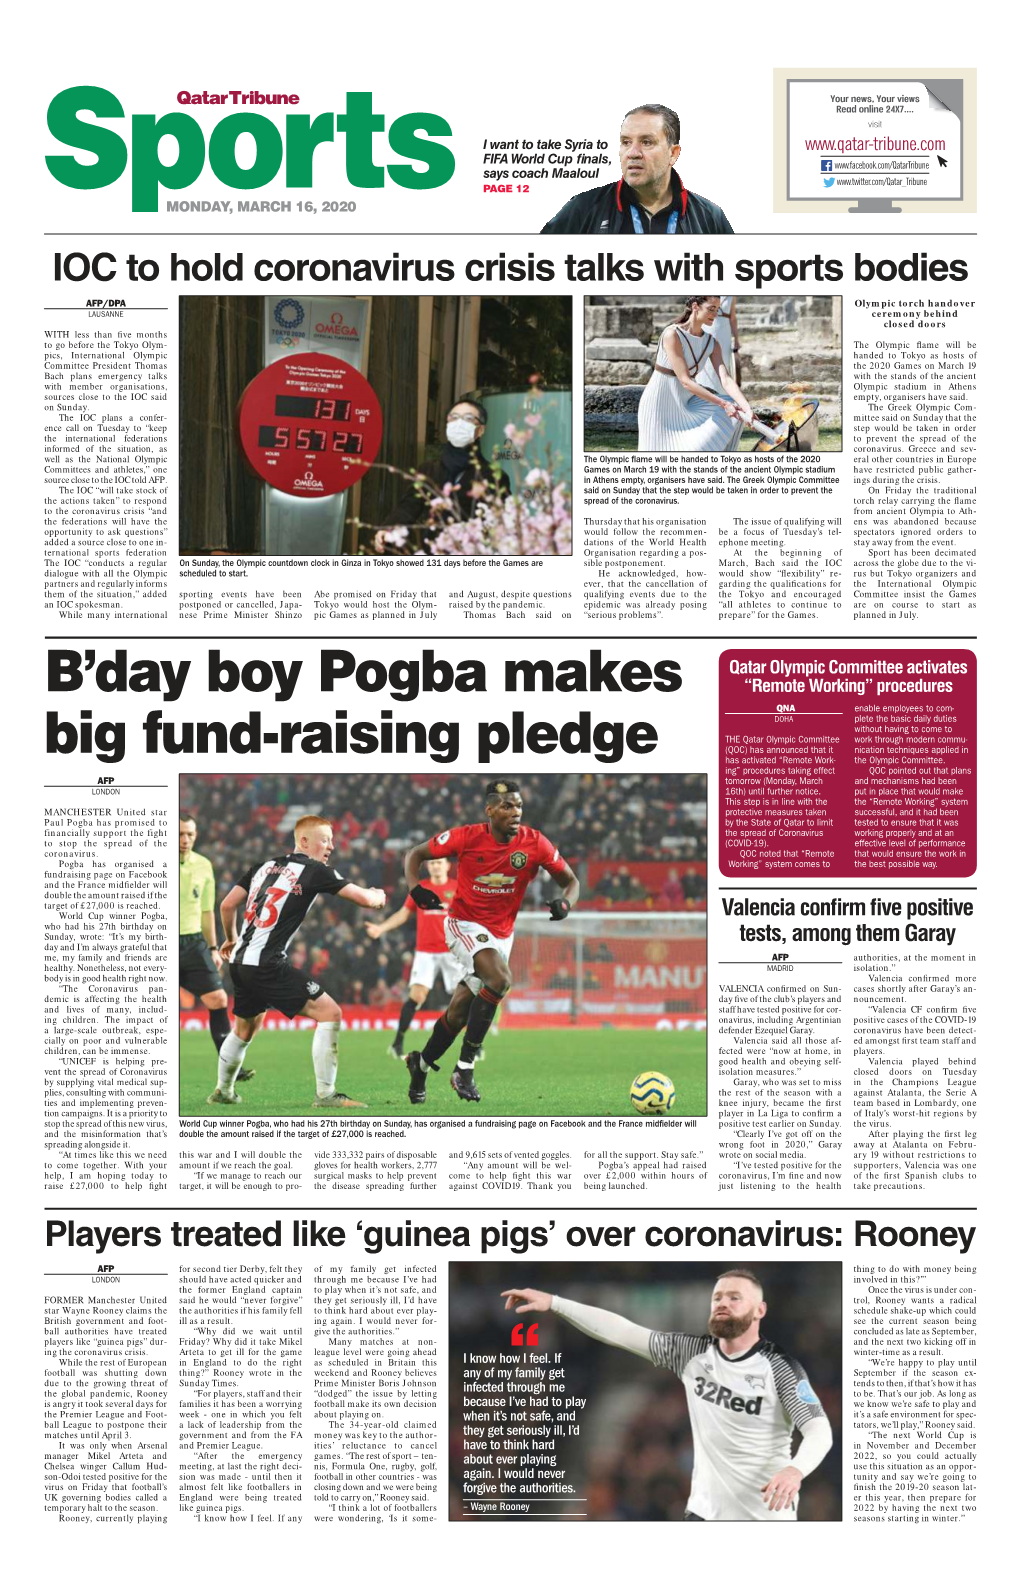 B'day Boy Pogba Makes Big Fund-Raising Pledge